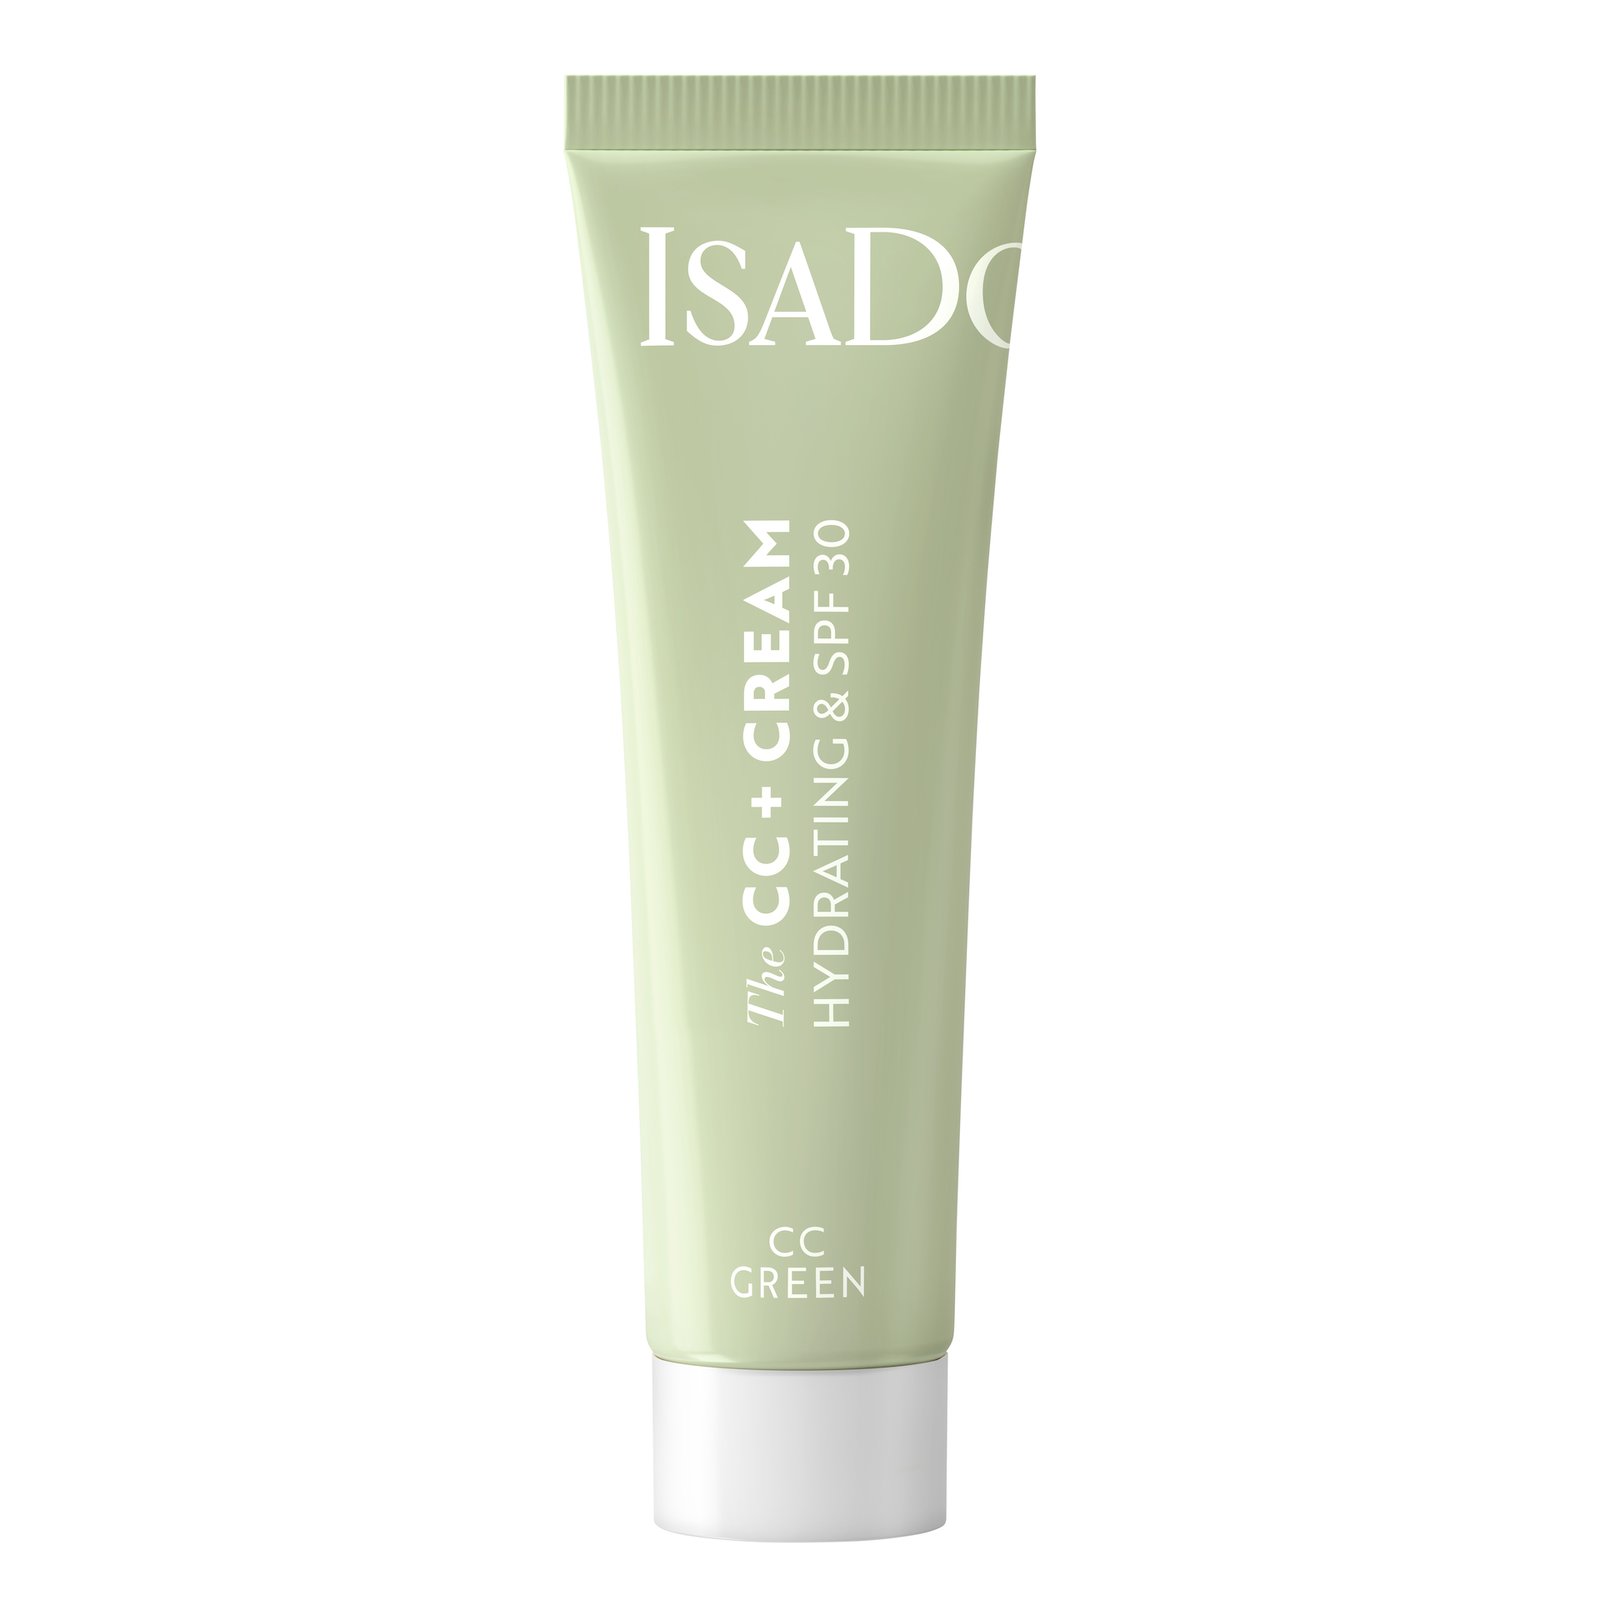 IsaDora The CC+ Cream Green CC 30 ml